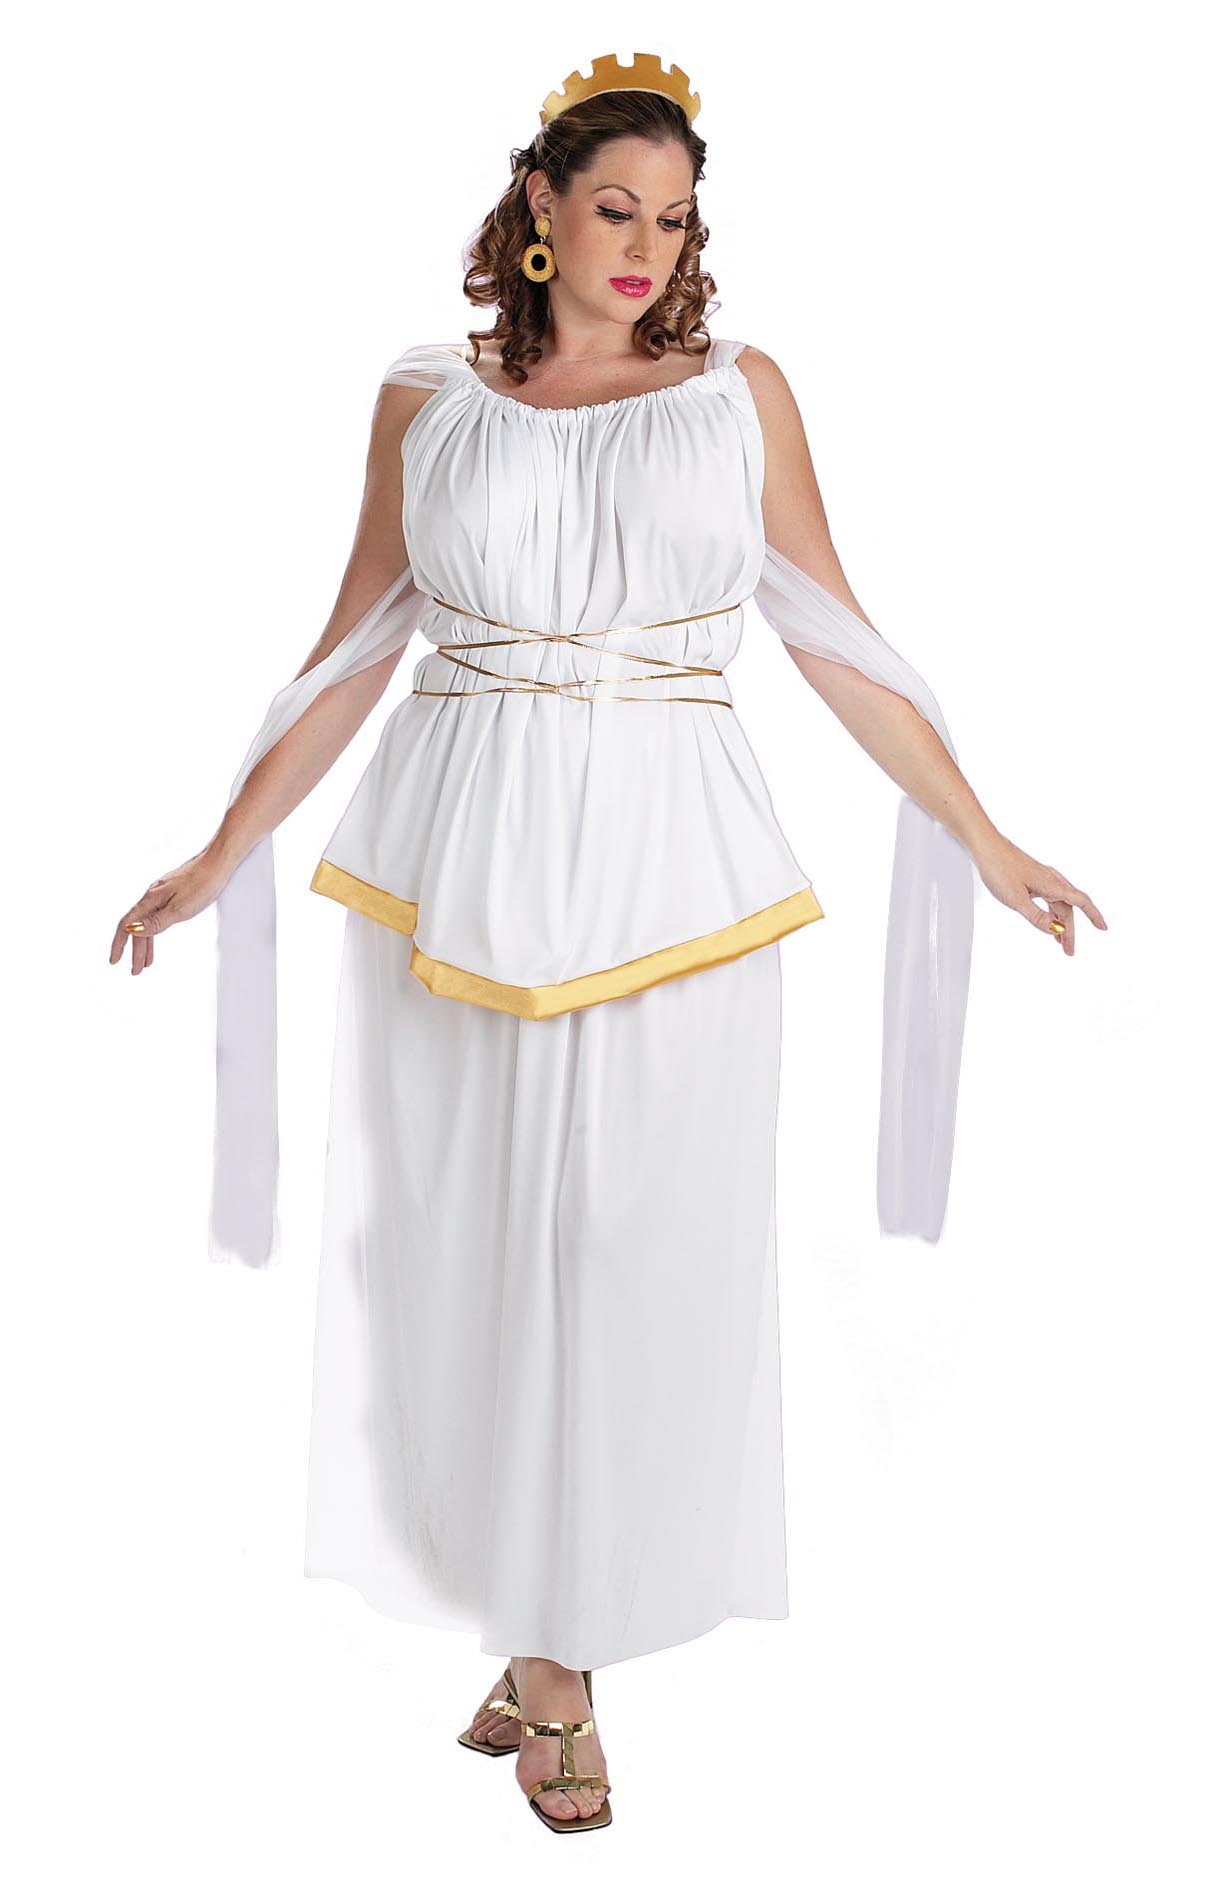 ATHENA GREEK GODDESS 300 Plus Size 18-20 Womens Costume | eBay